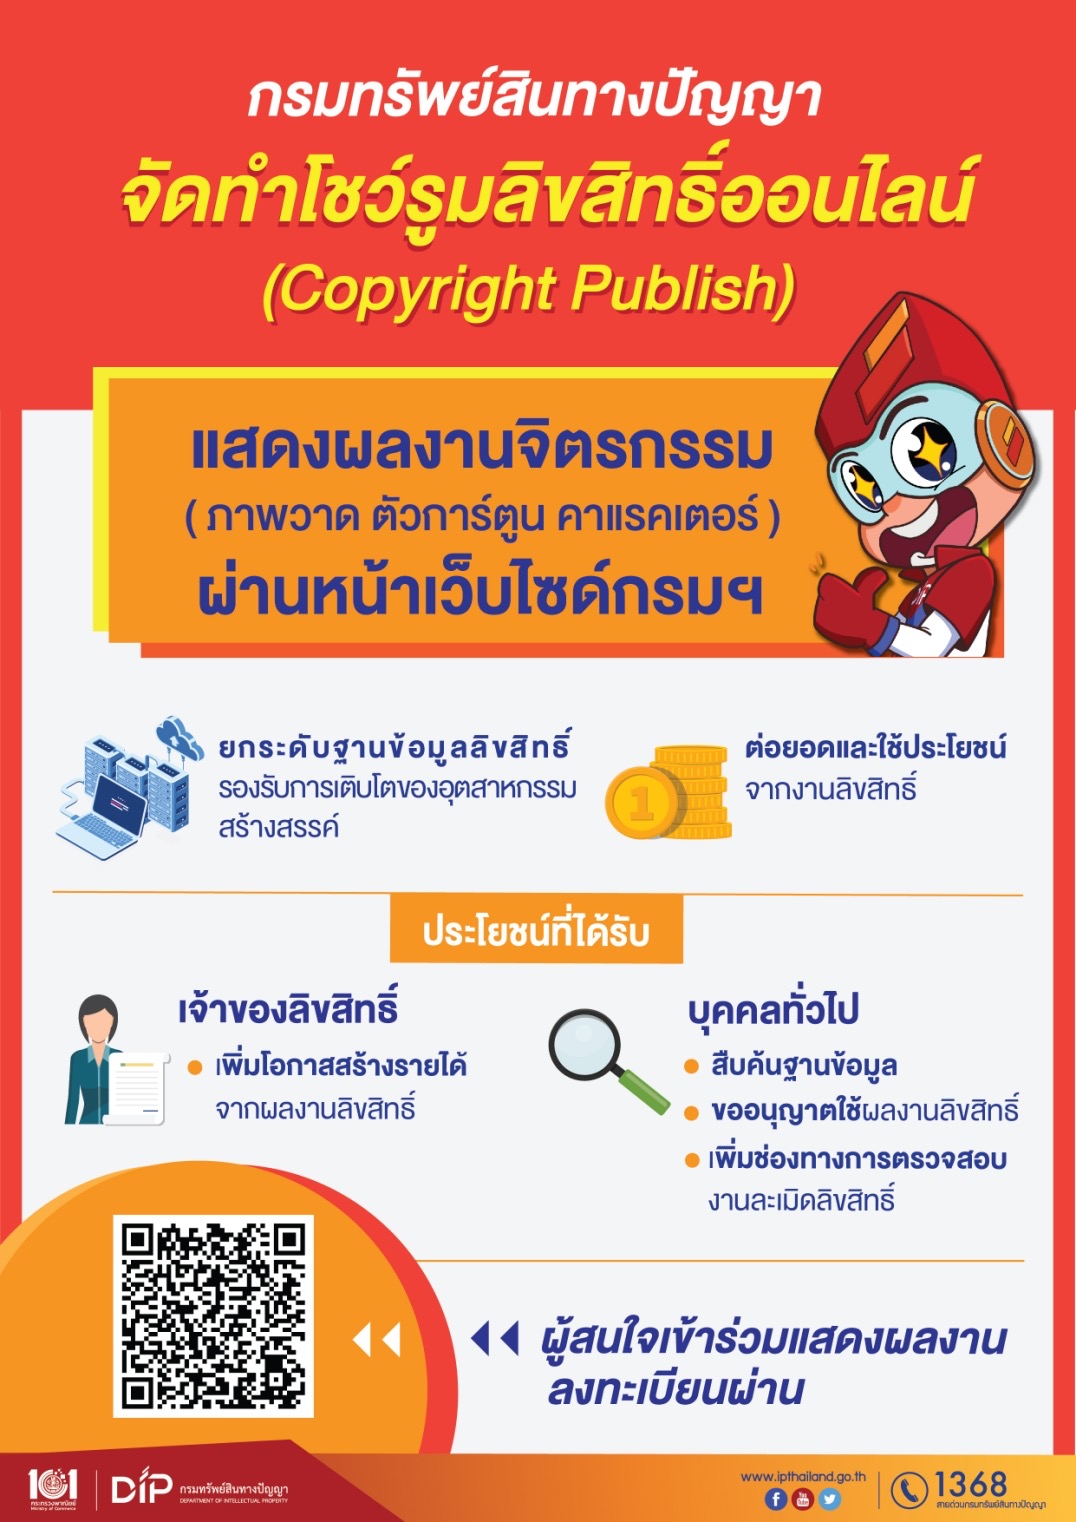 Copyright Publish